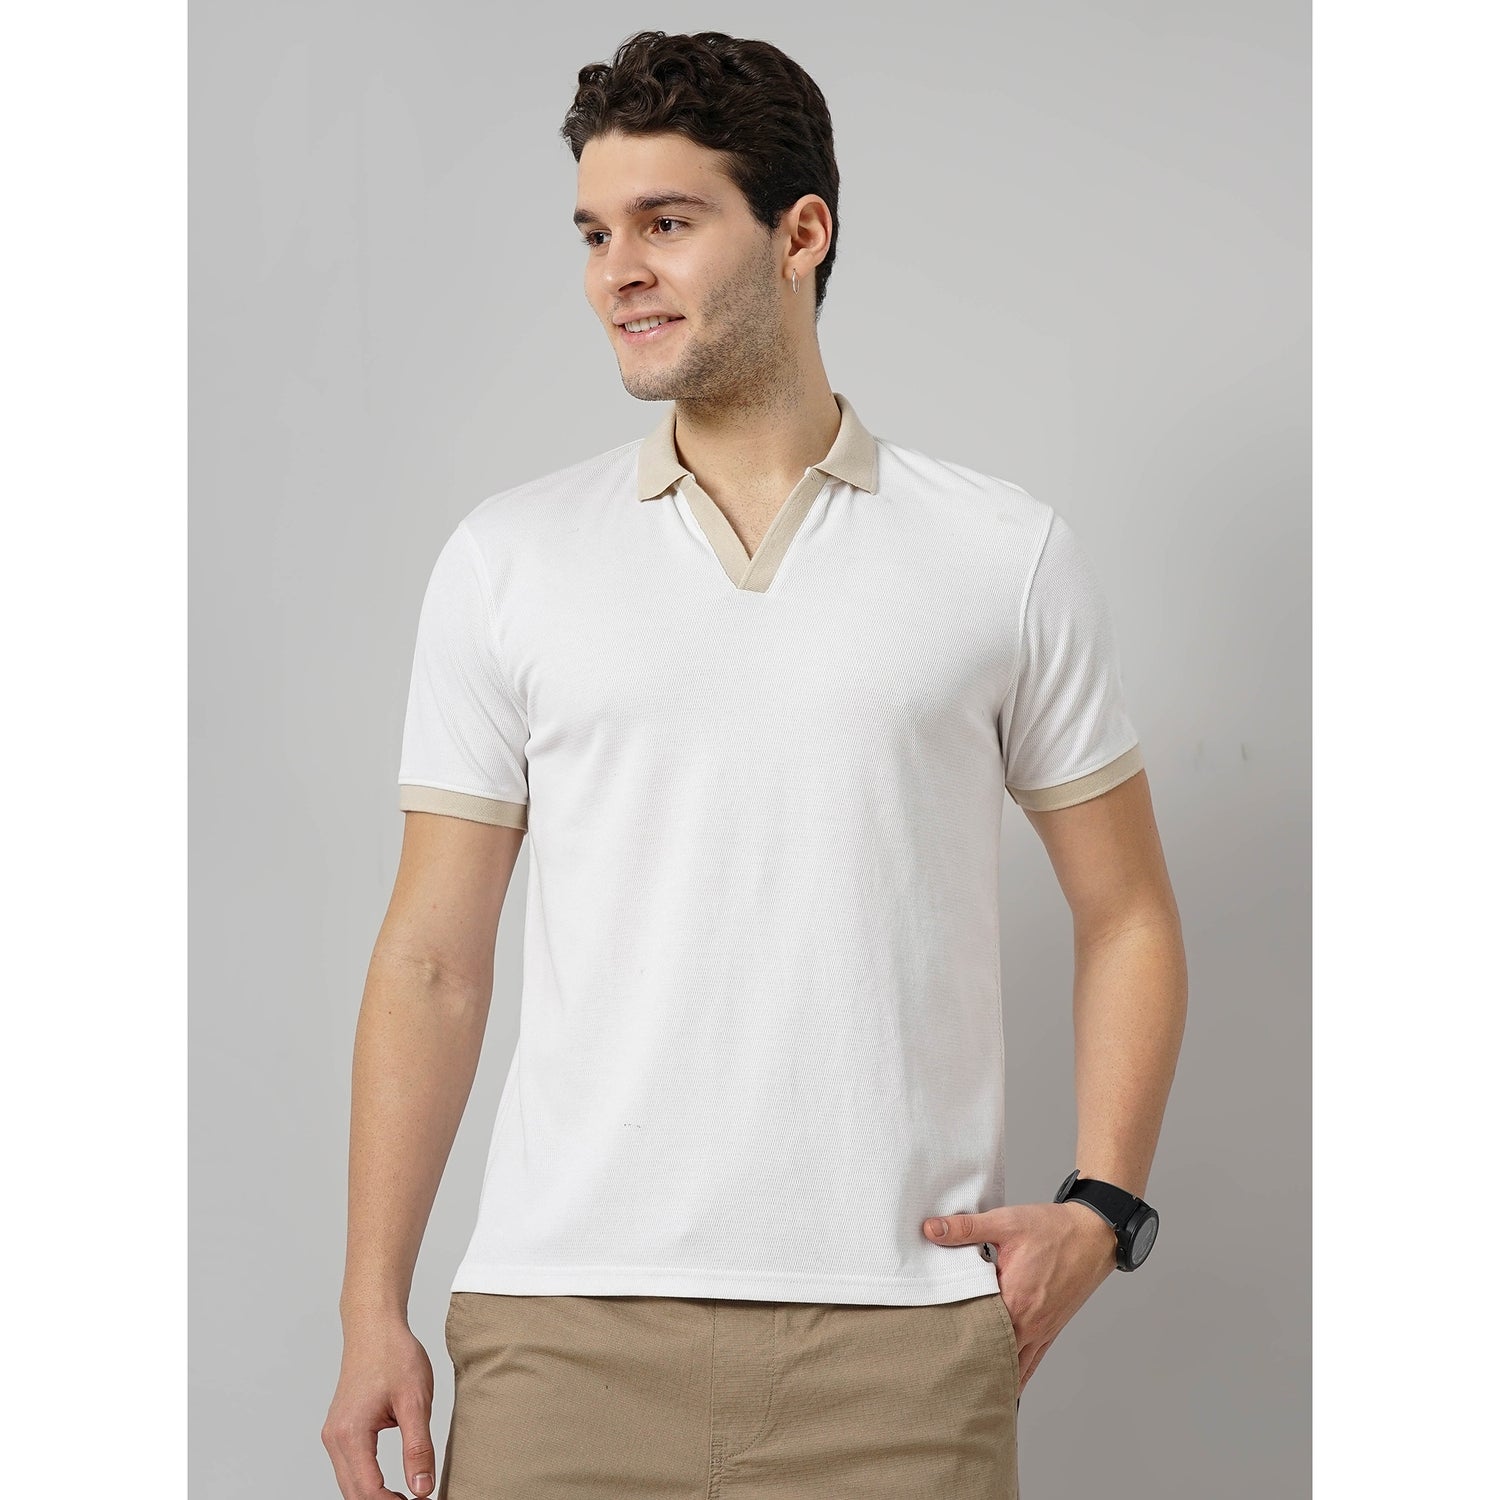 Men's White Solid Regular Fit Cotton Fashion Polo Tshirts (GEHENLEY)